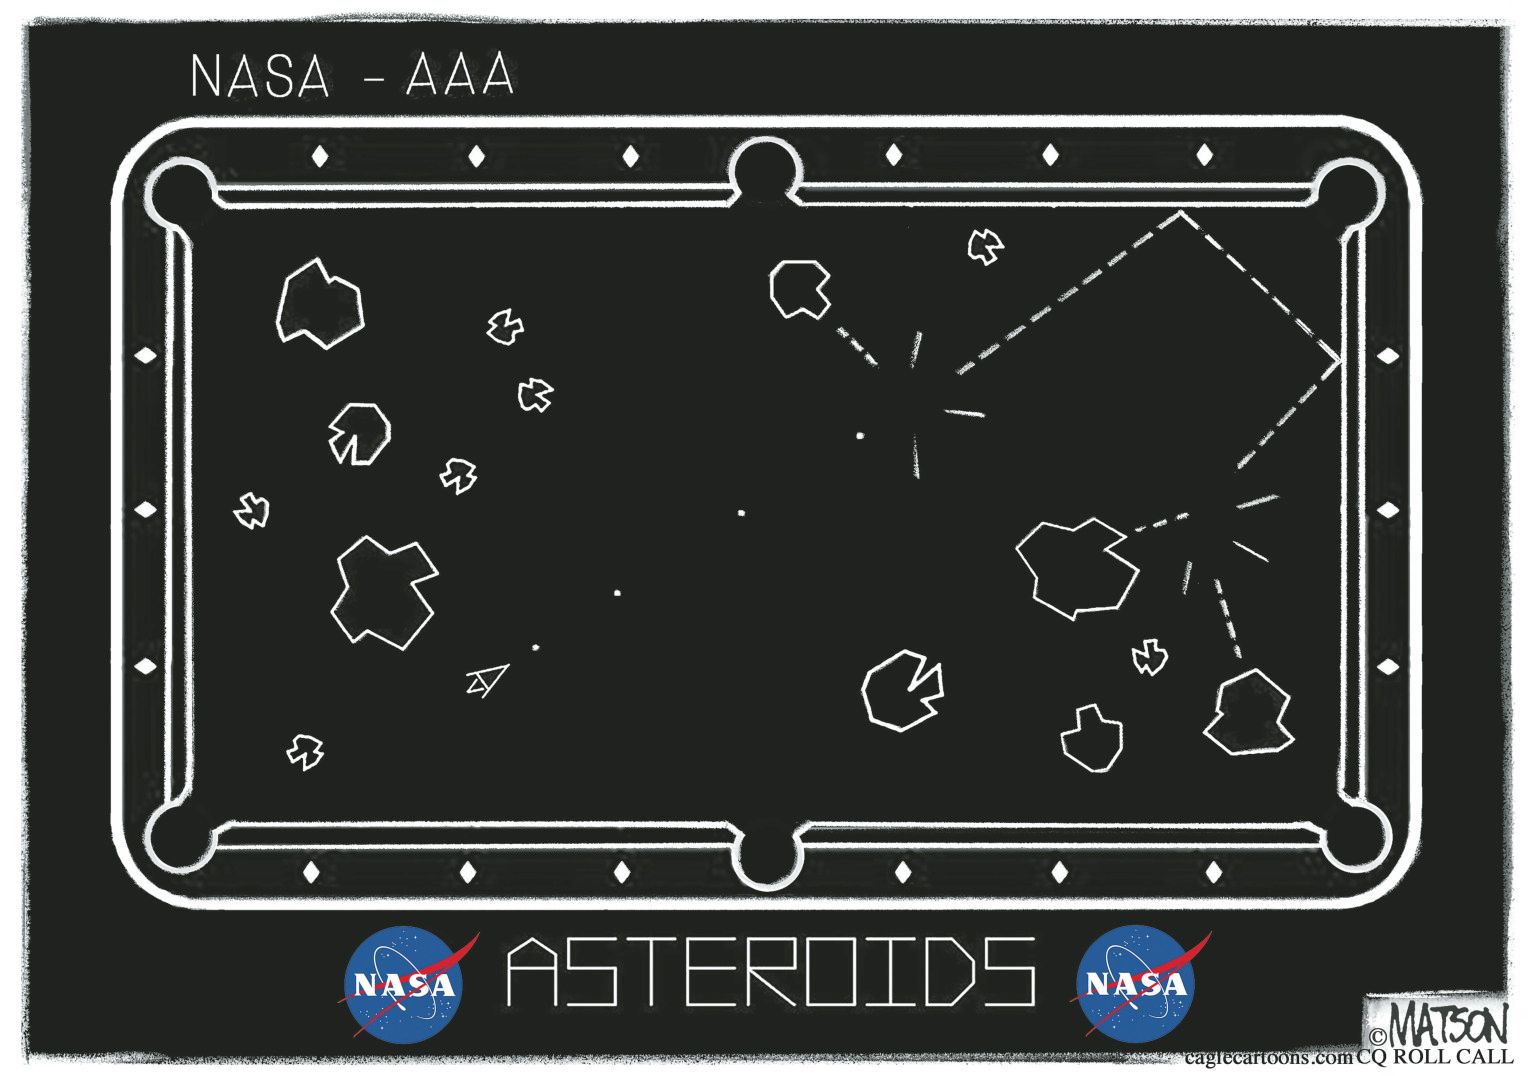 NASA Asteroid Deflection Bank Shot - newsjustin.press - editorial cartoon